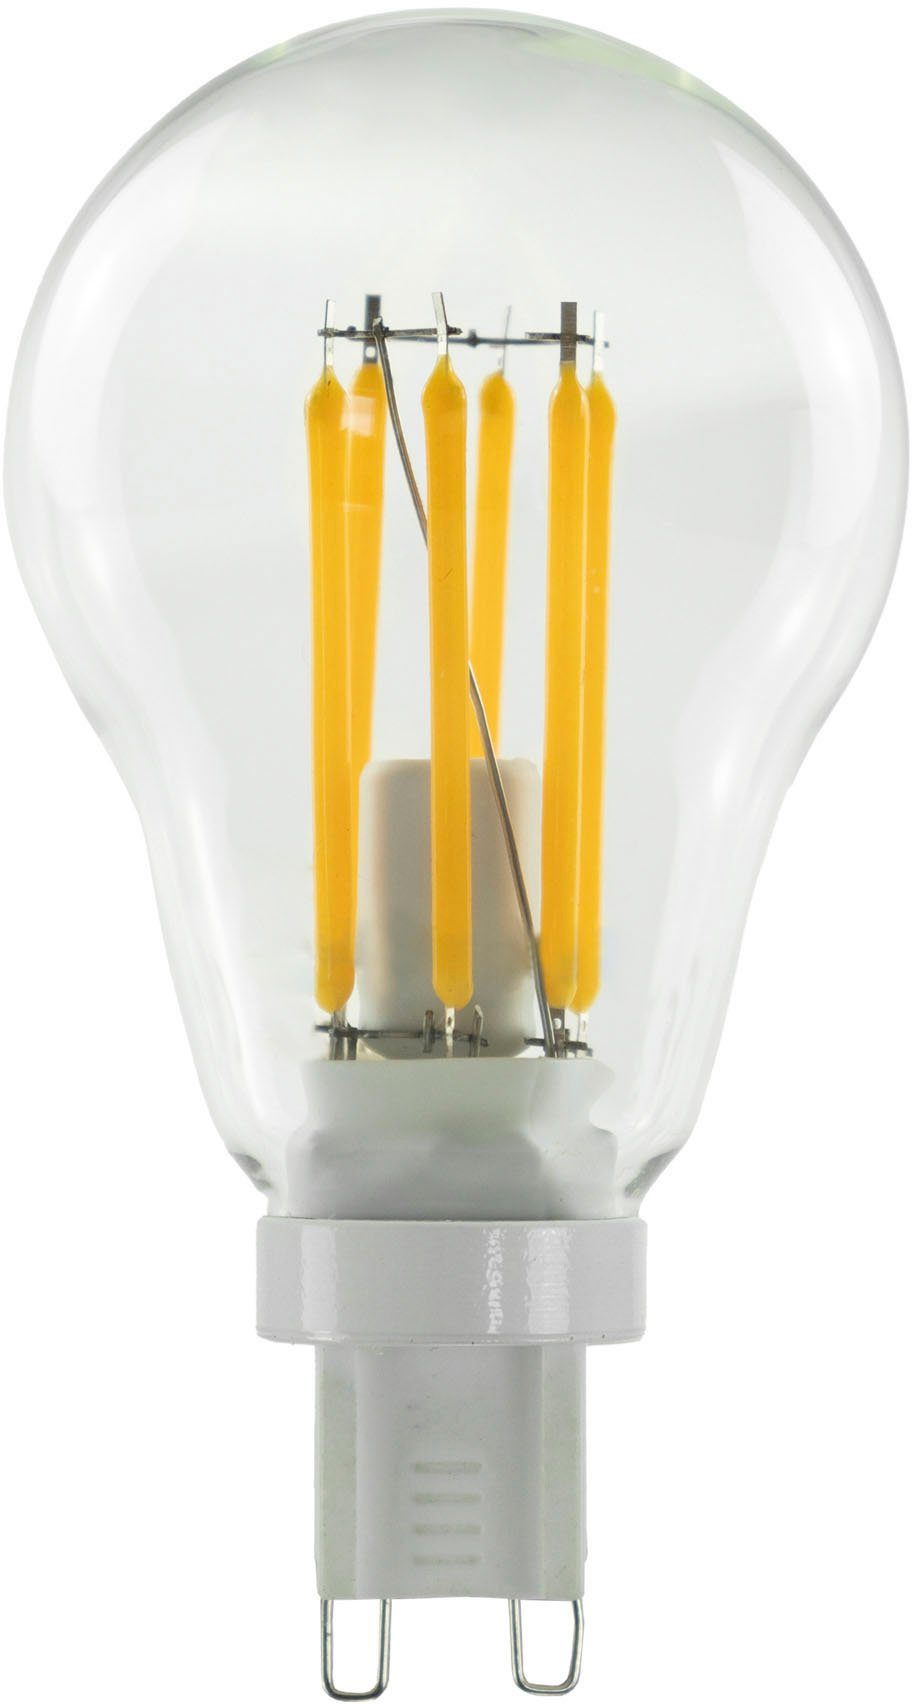 SEGULA LED-Leuchtmittel LED Glühlampe A15 - G9, G9, 1 St., Warmweiß, LED Glühlampe A15 - G9, 2700K, klar, 3,2W, CRI 90, dimmbar | Leuchtmittel